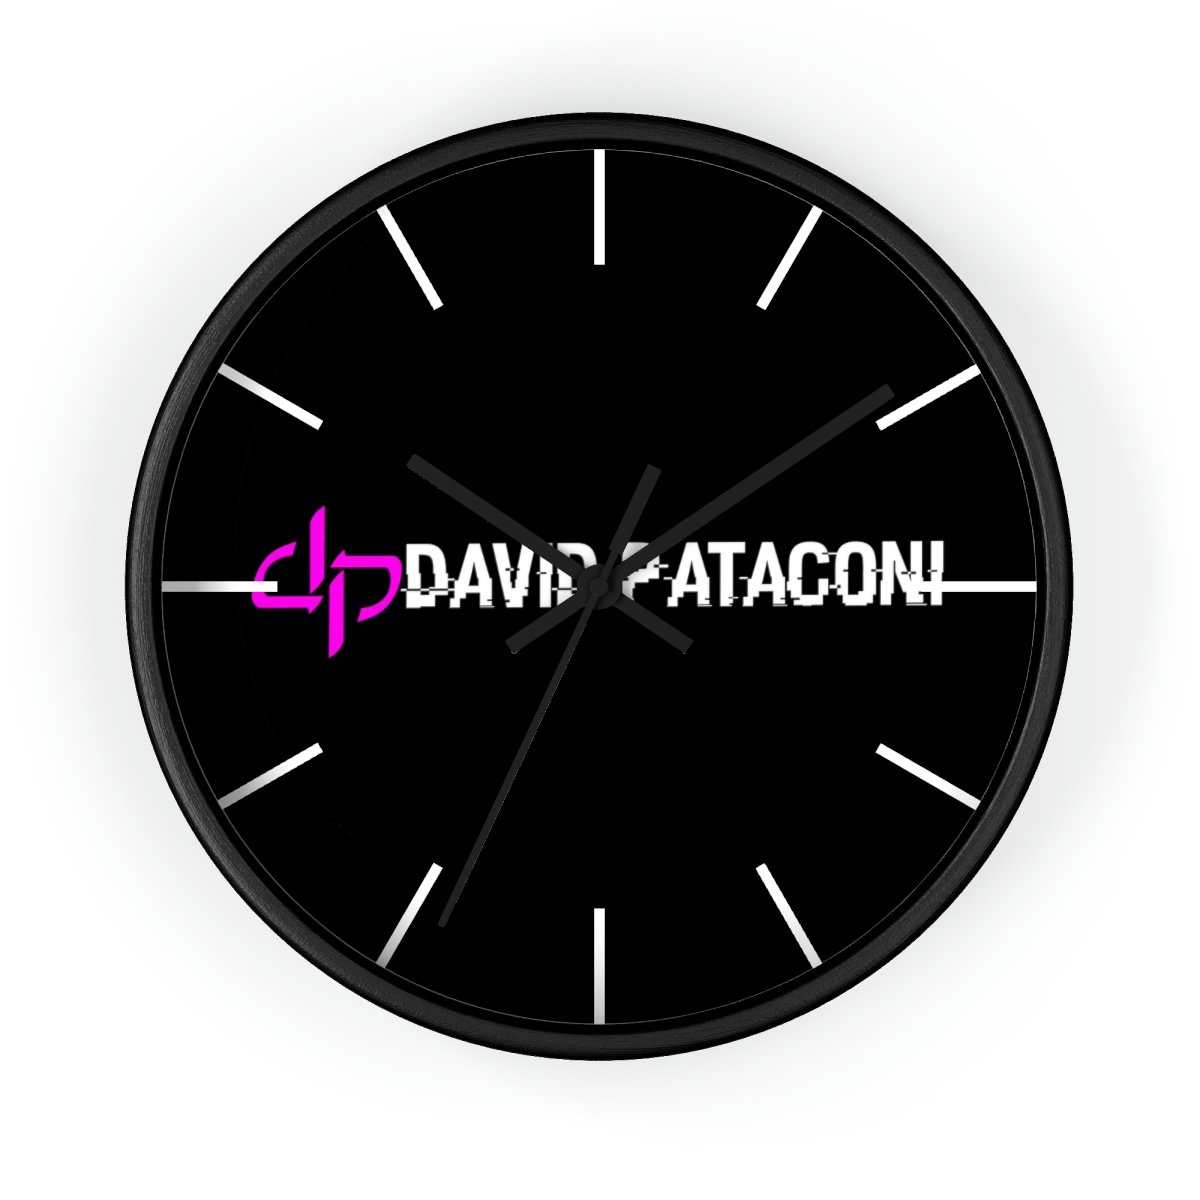 David Pataconi Wall clock